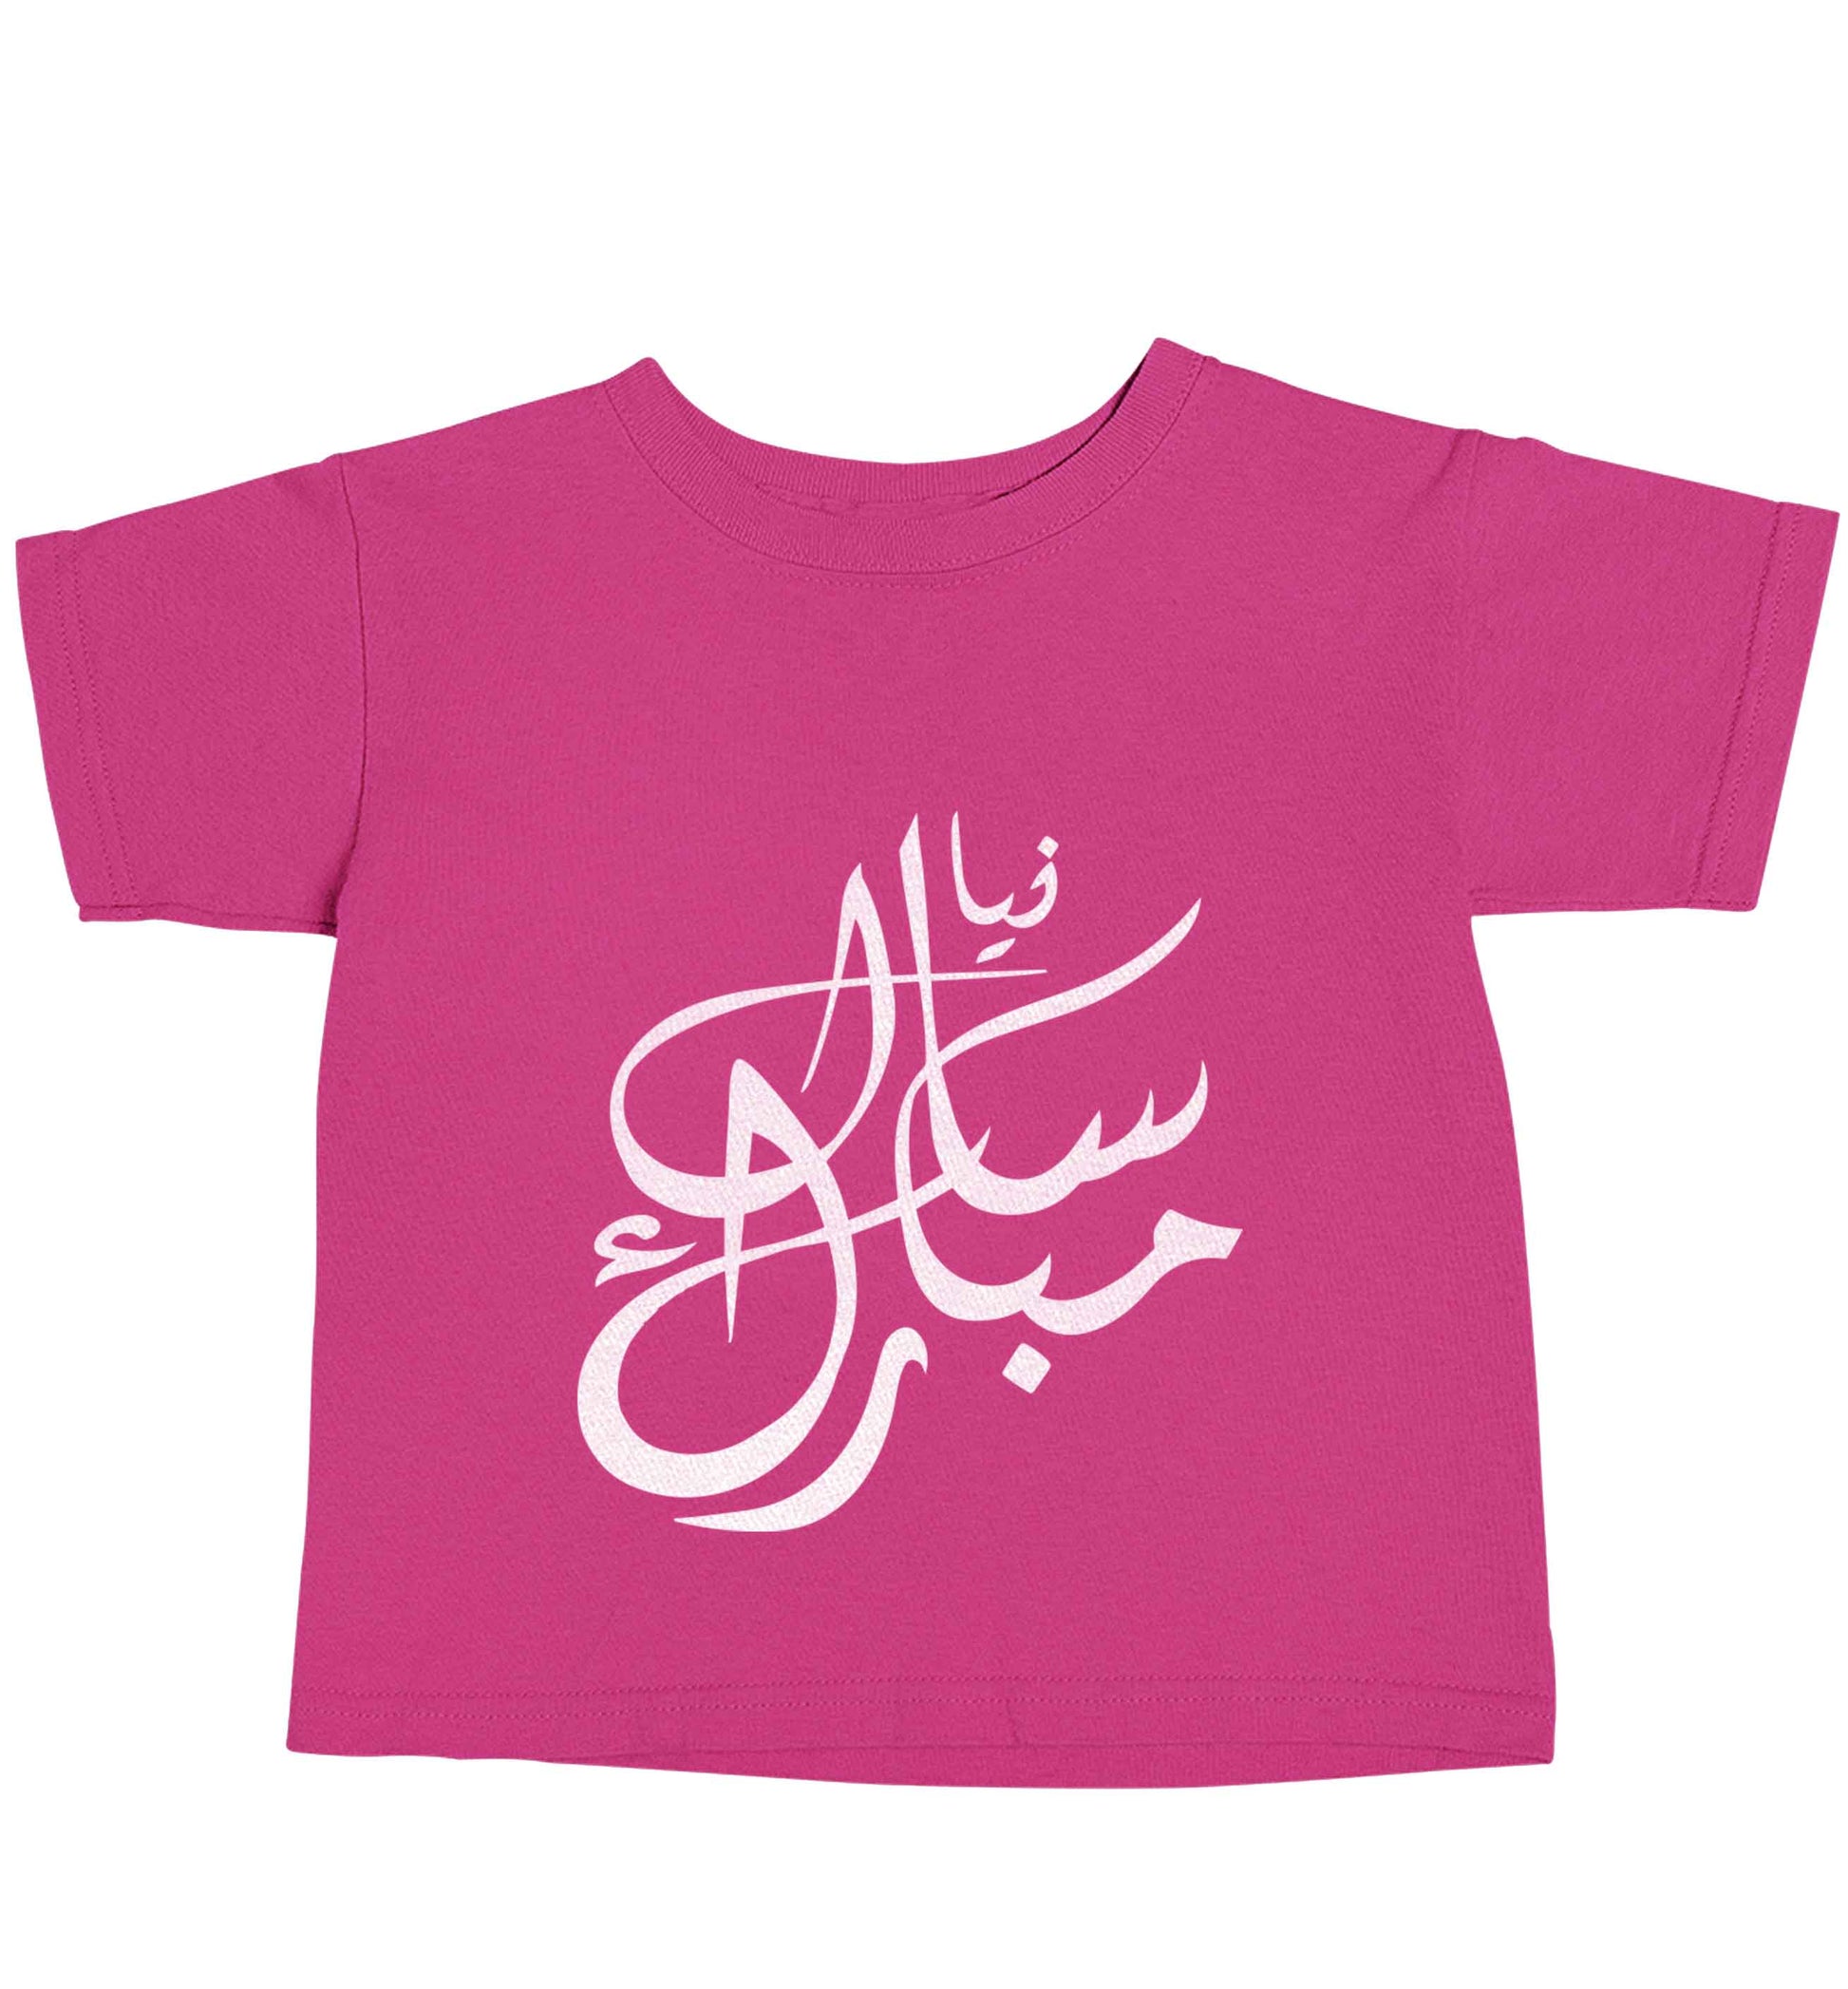 Urdu Naya saal mubarak pink baby toddler Tshirt 2 Years